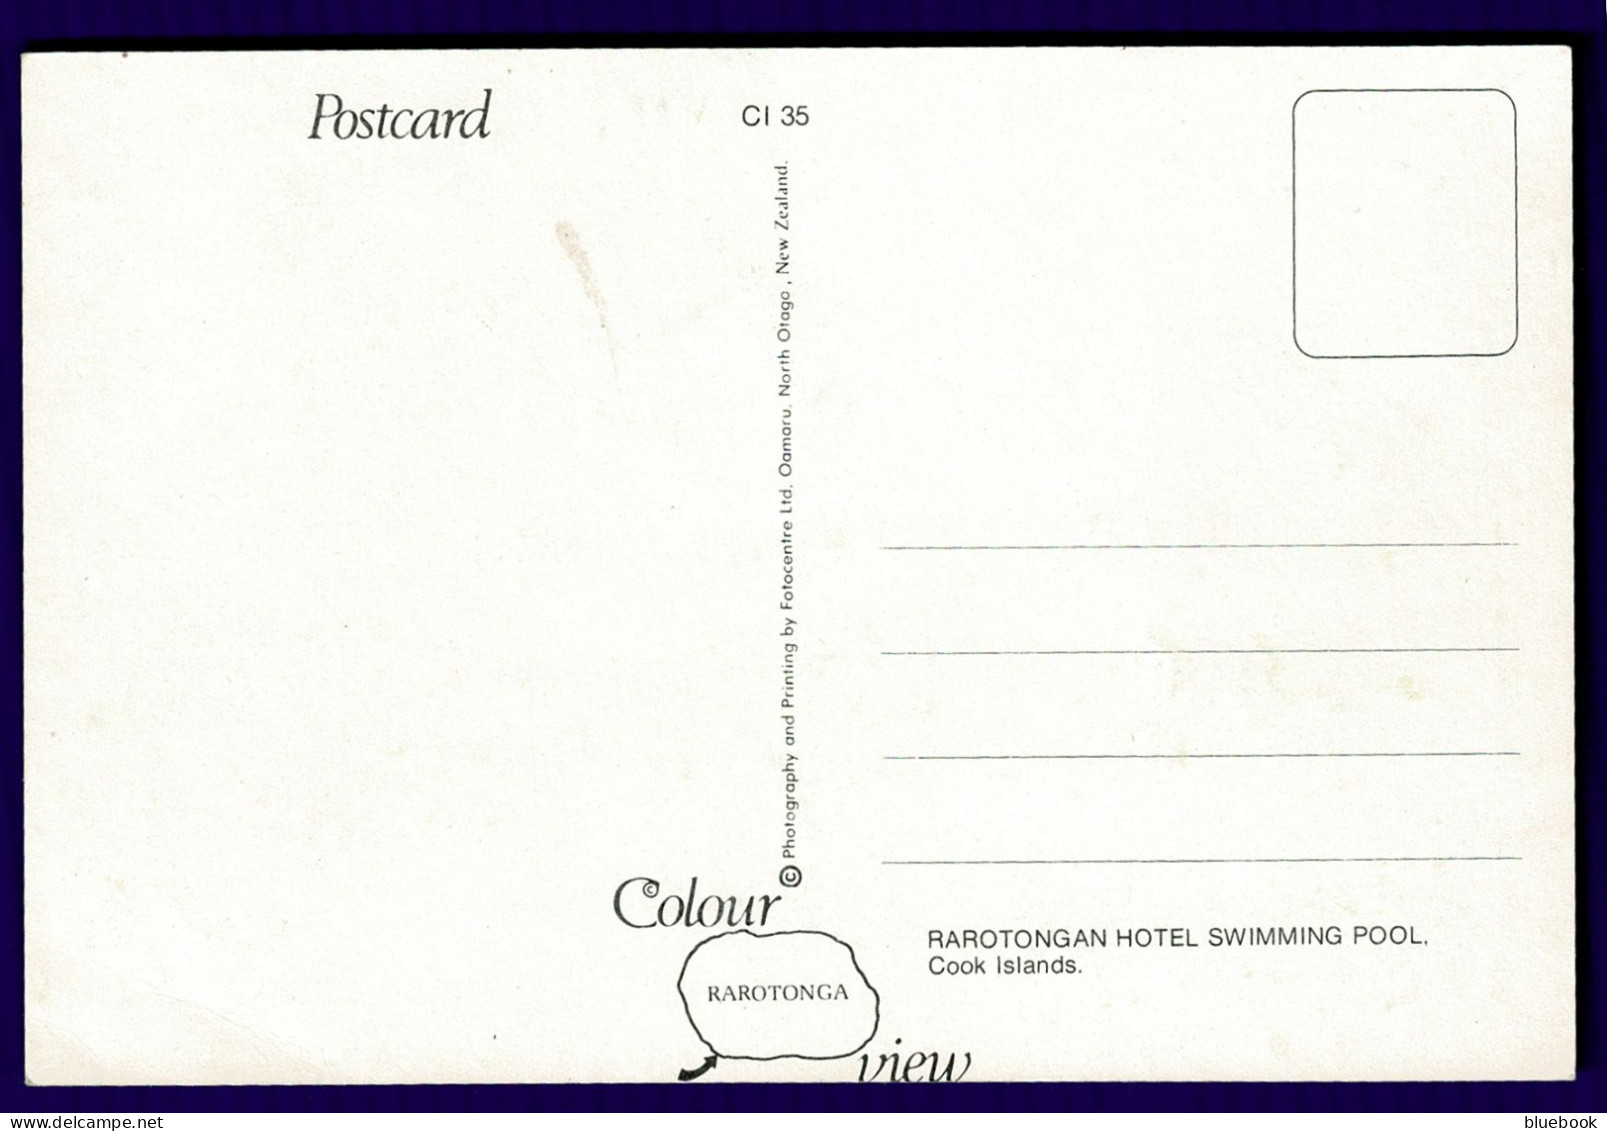 Ref 1647 - Cook Islands Postcard - Rarotongan Hotel Swimming Pool - Pacific Island - Cook